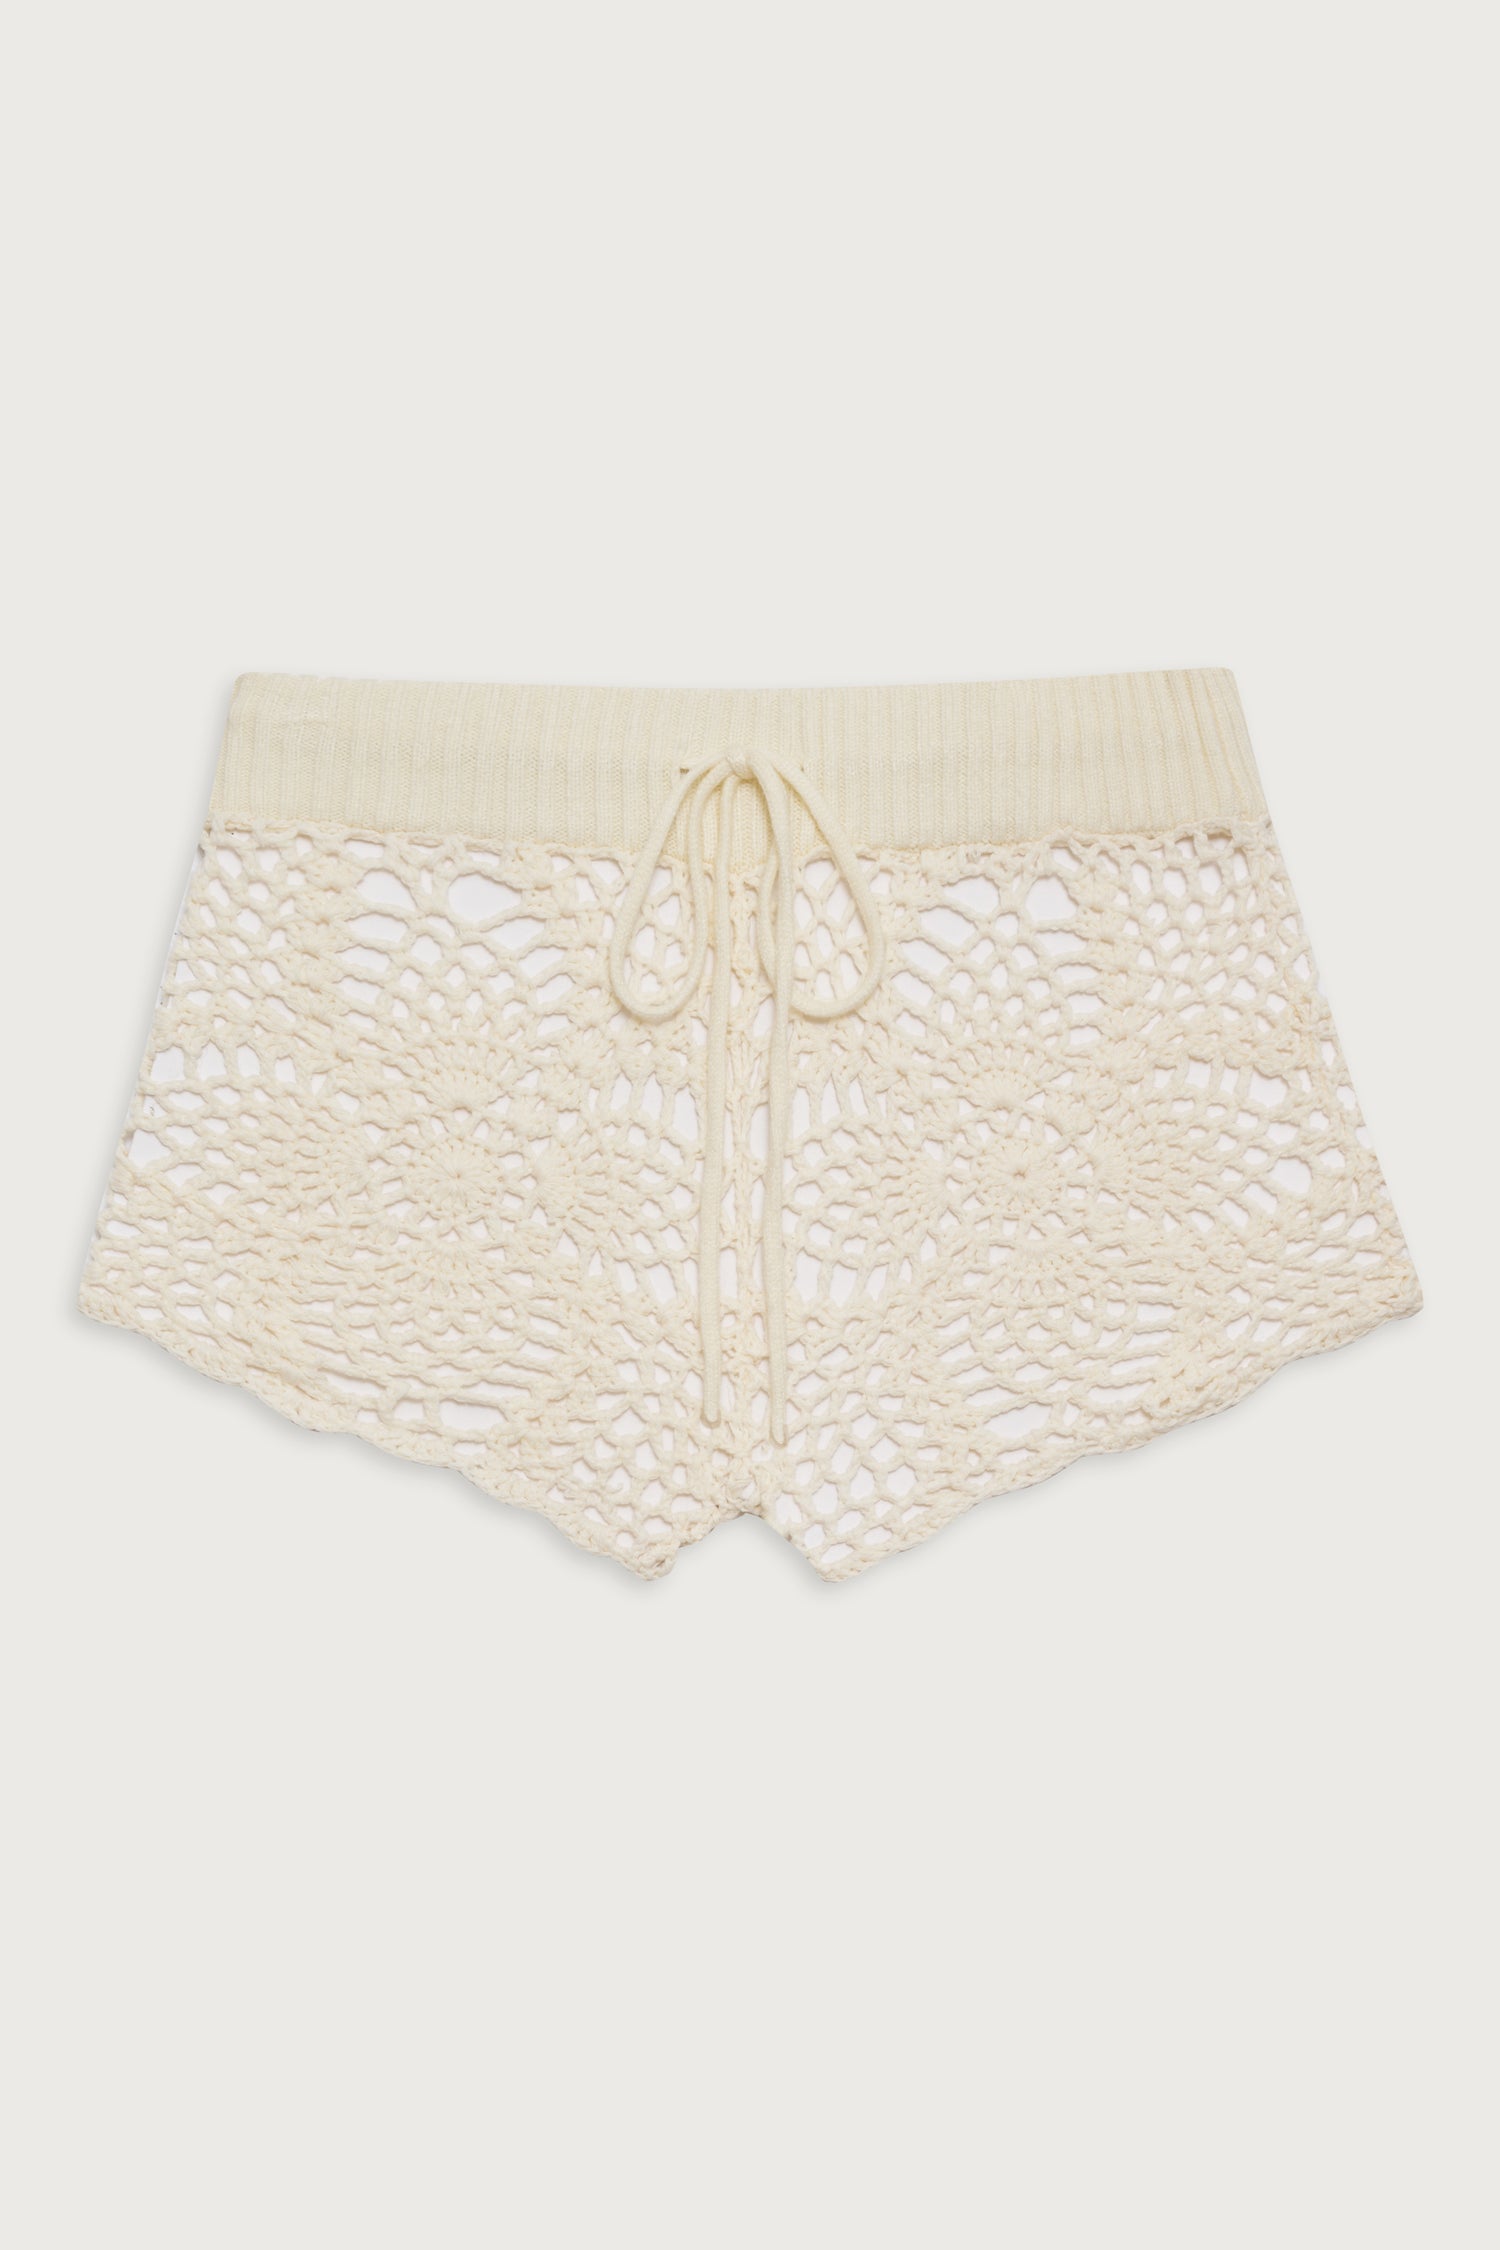 Lyla Crochet Mini Short - White